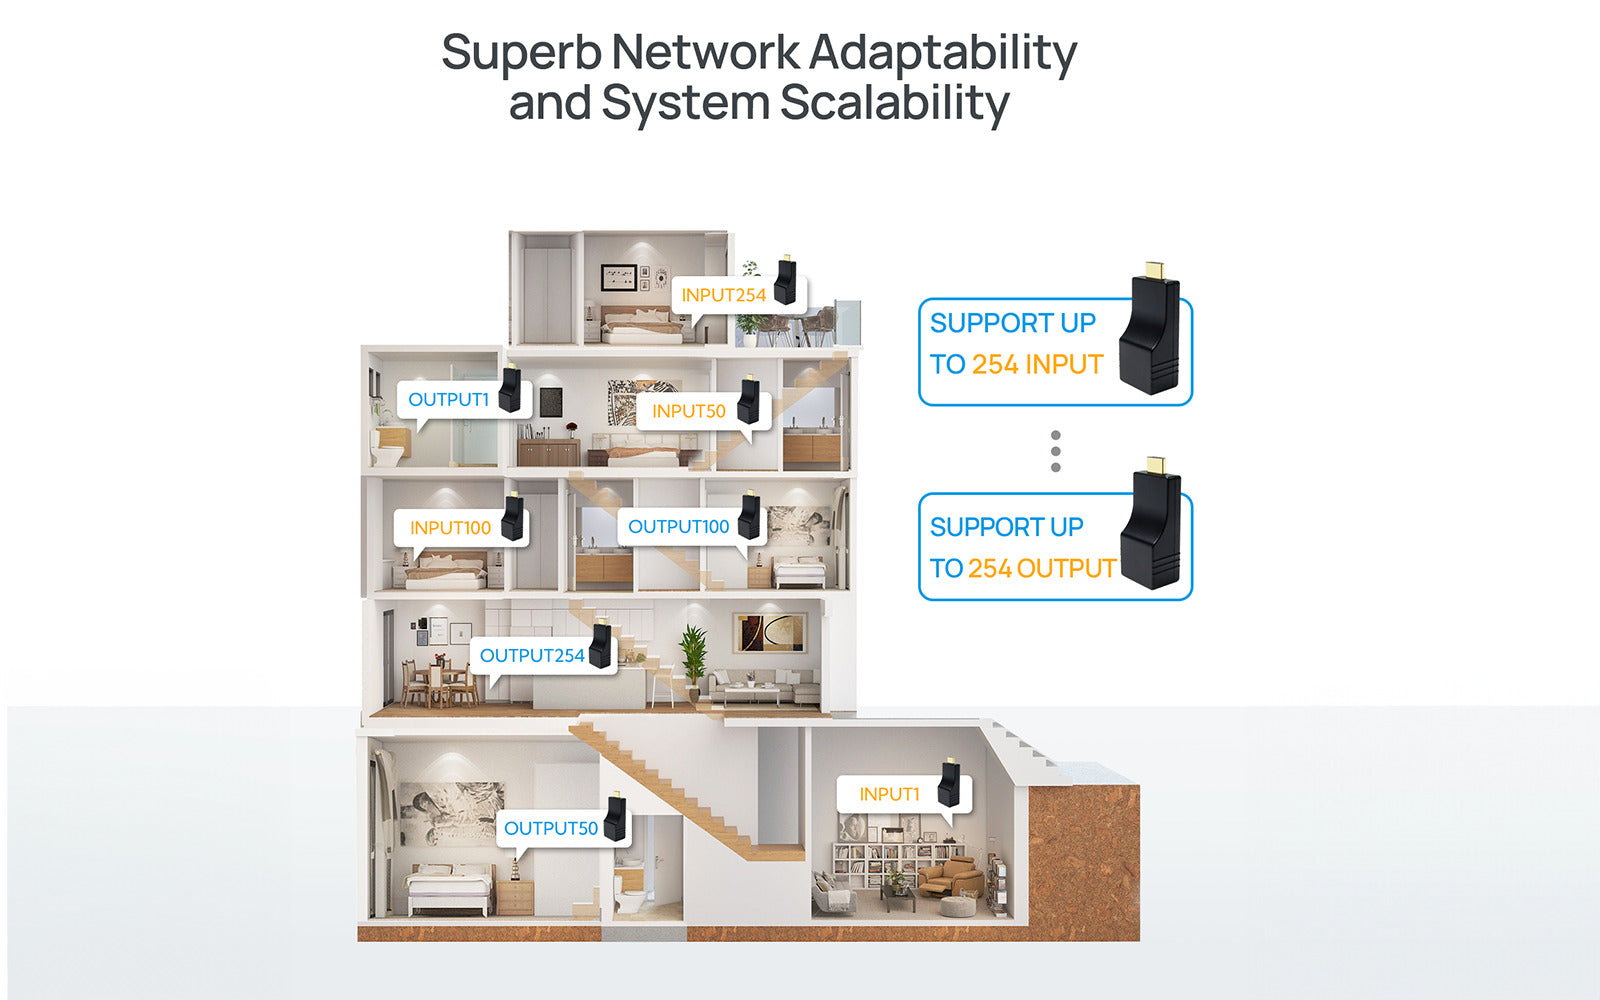 network adaptability